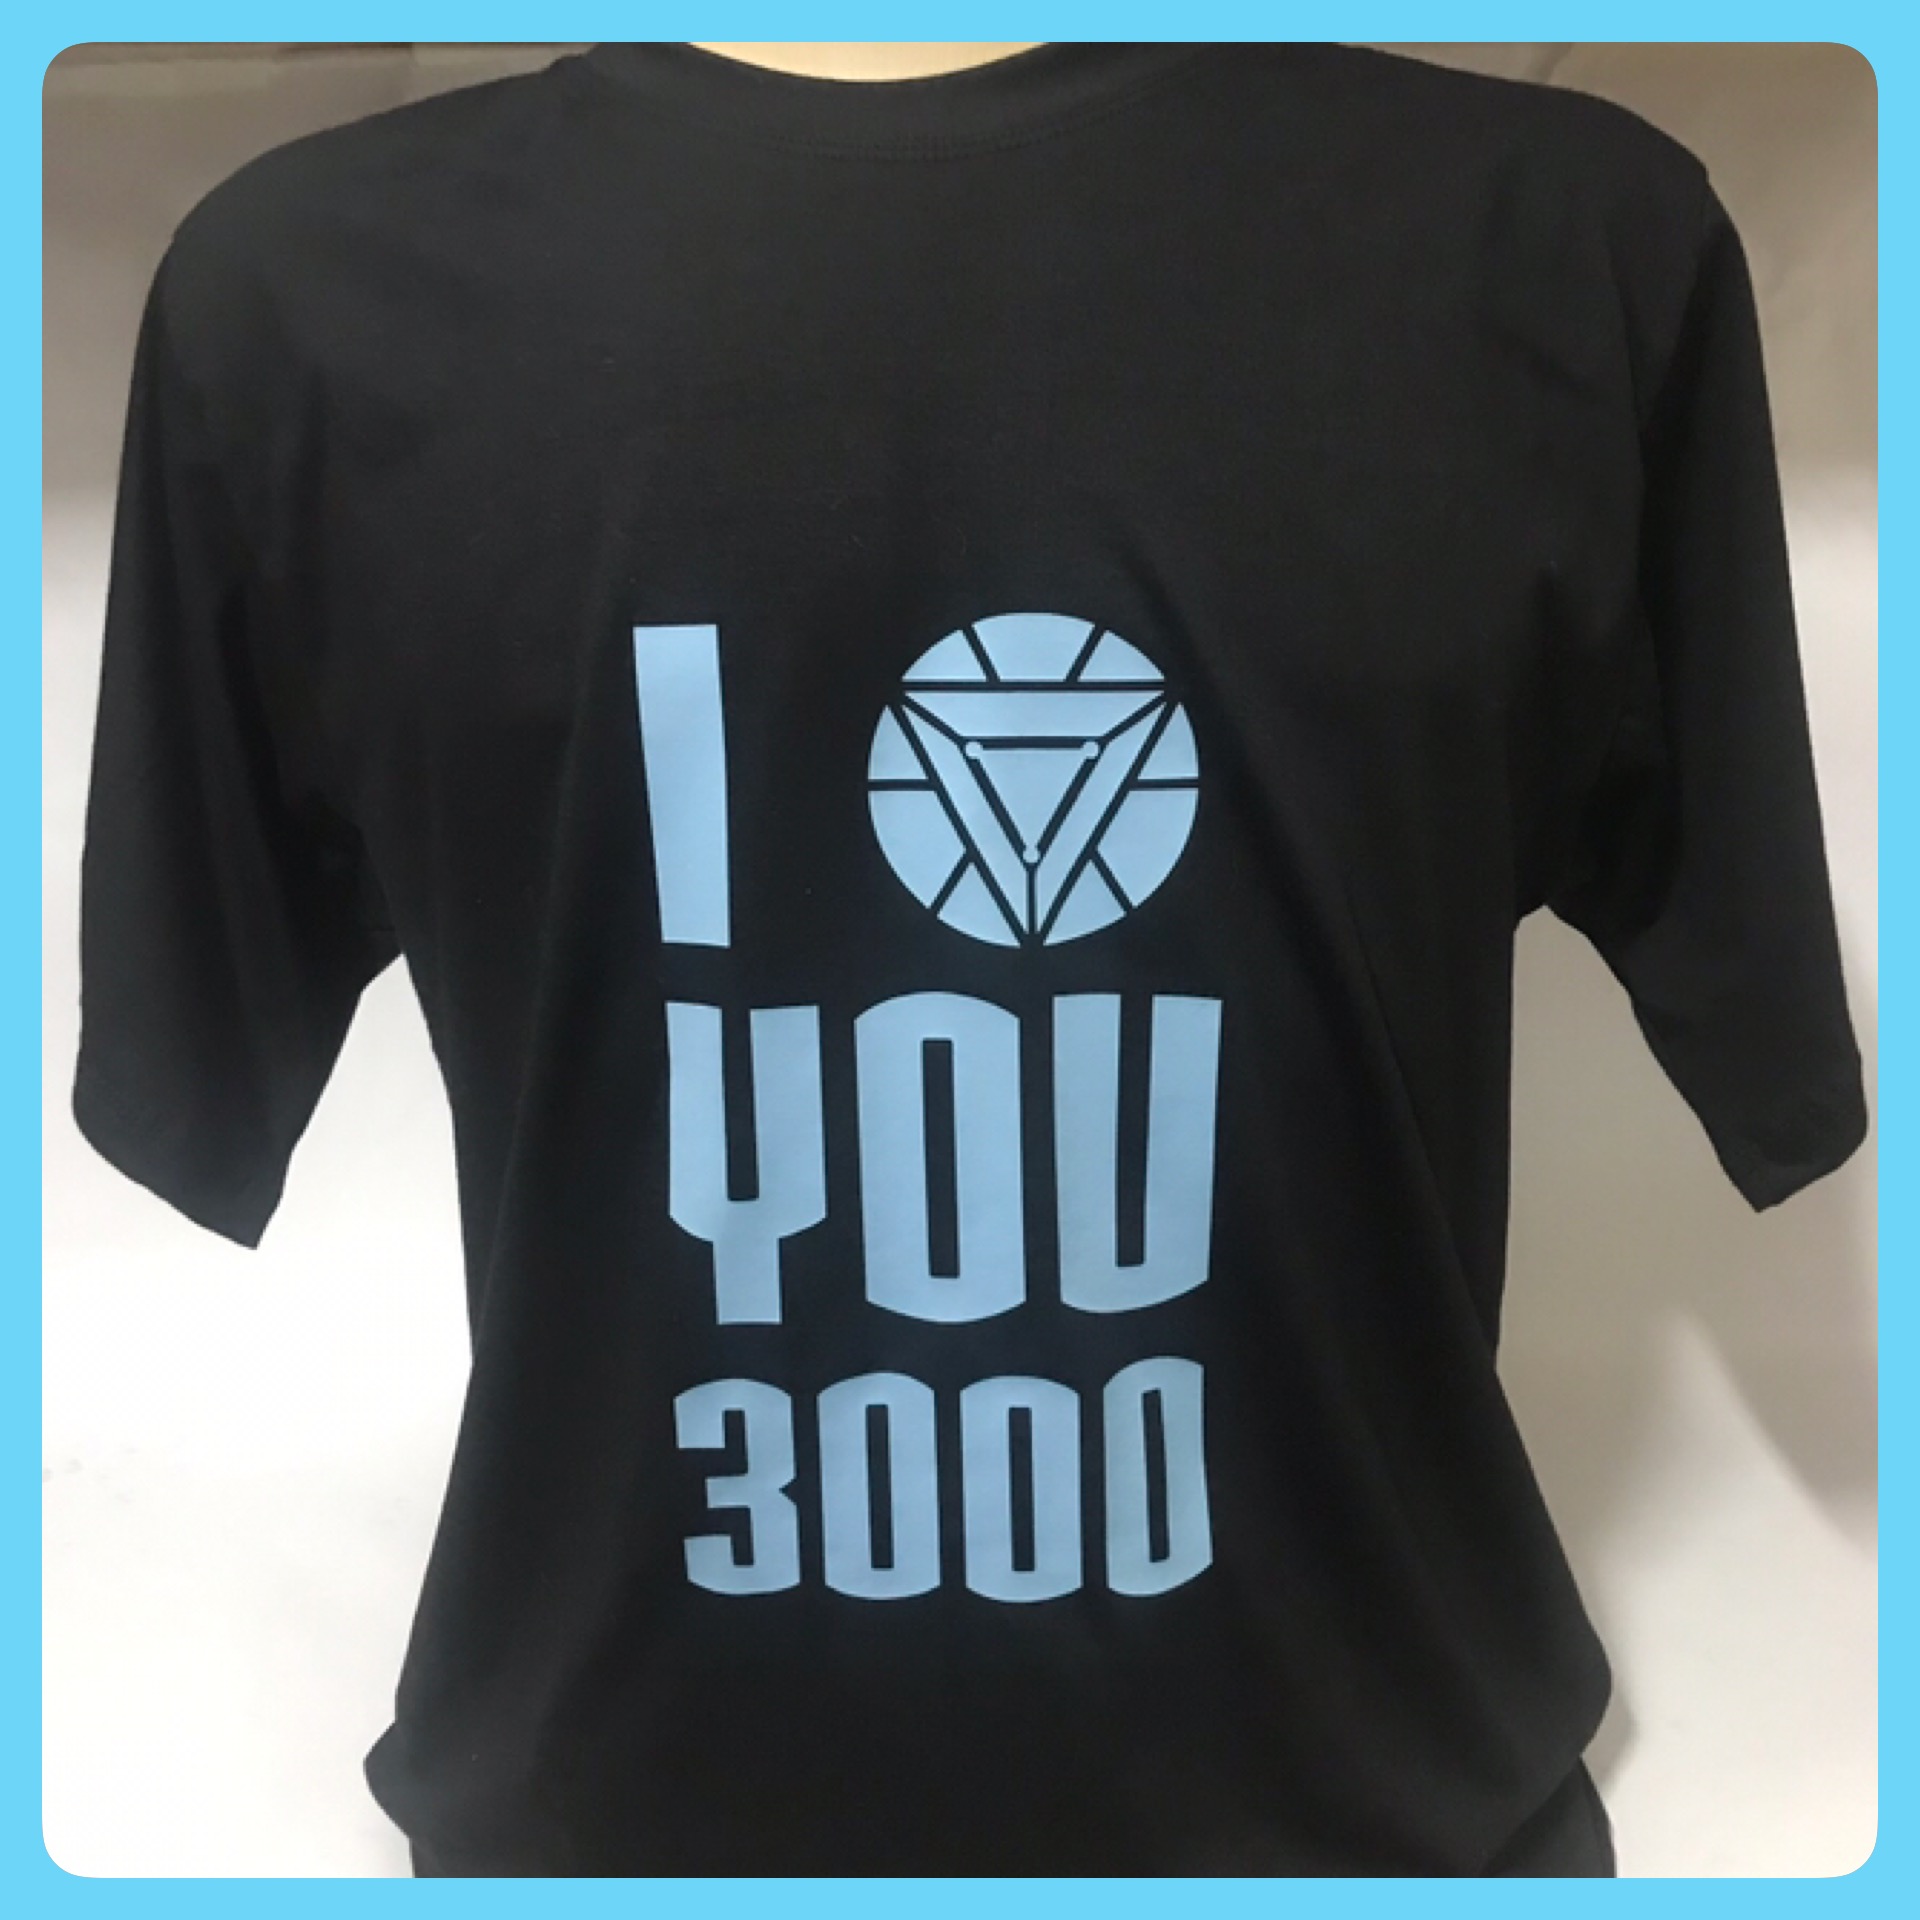 Camiseta personalizada Dad I love you 3000